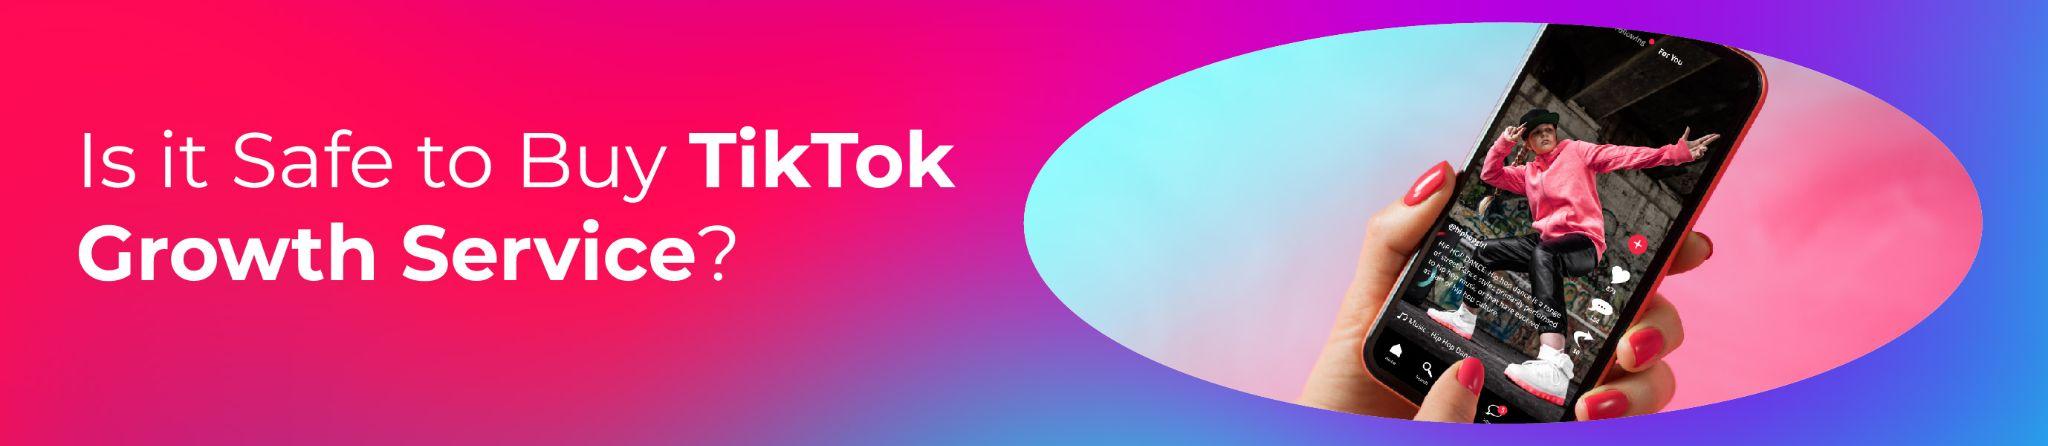 Is it Safe to Buy TikTok Growth Service?